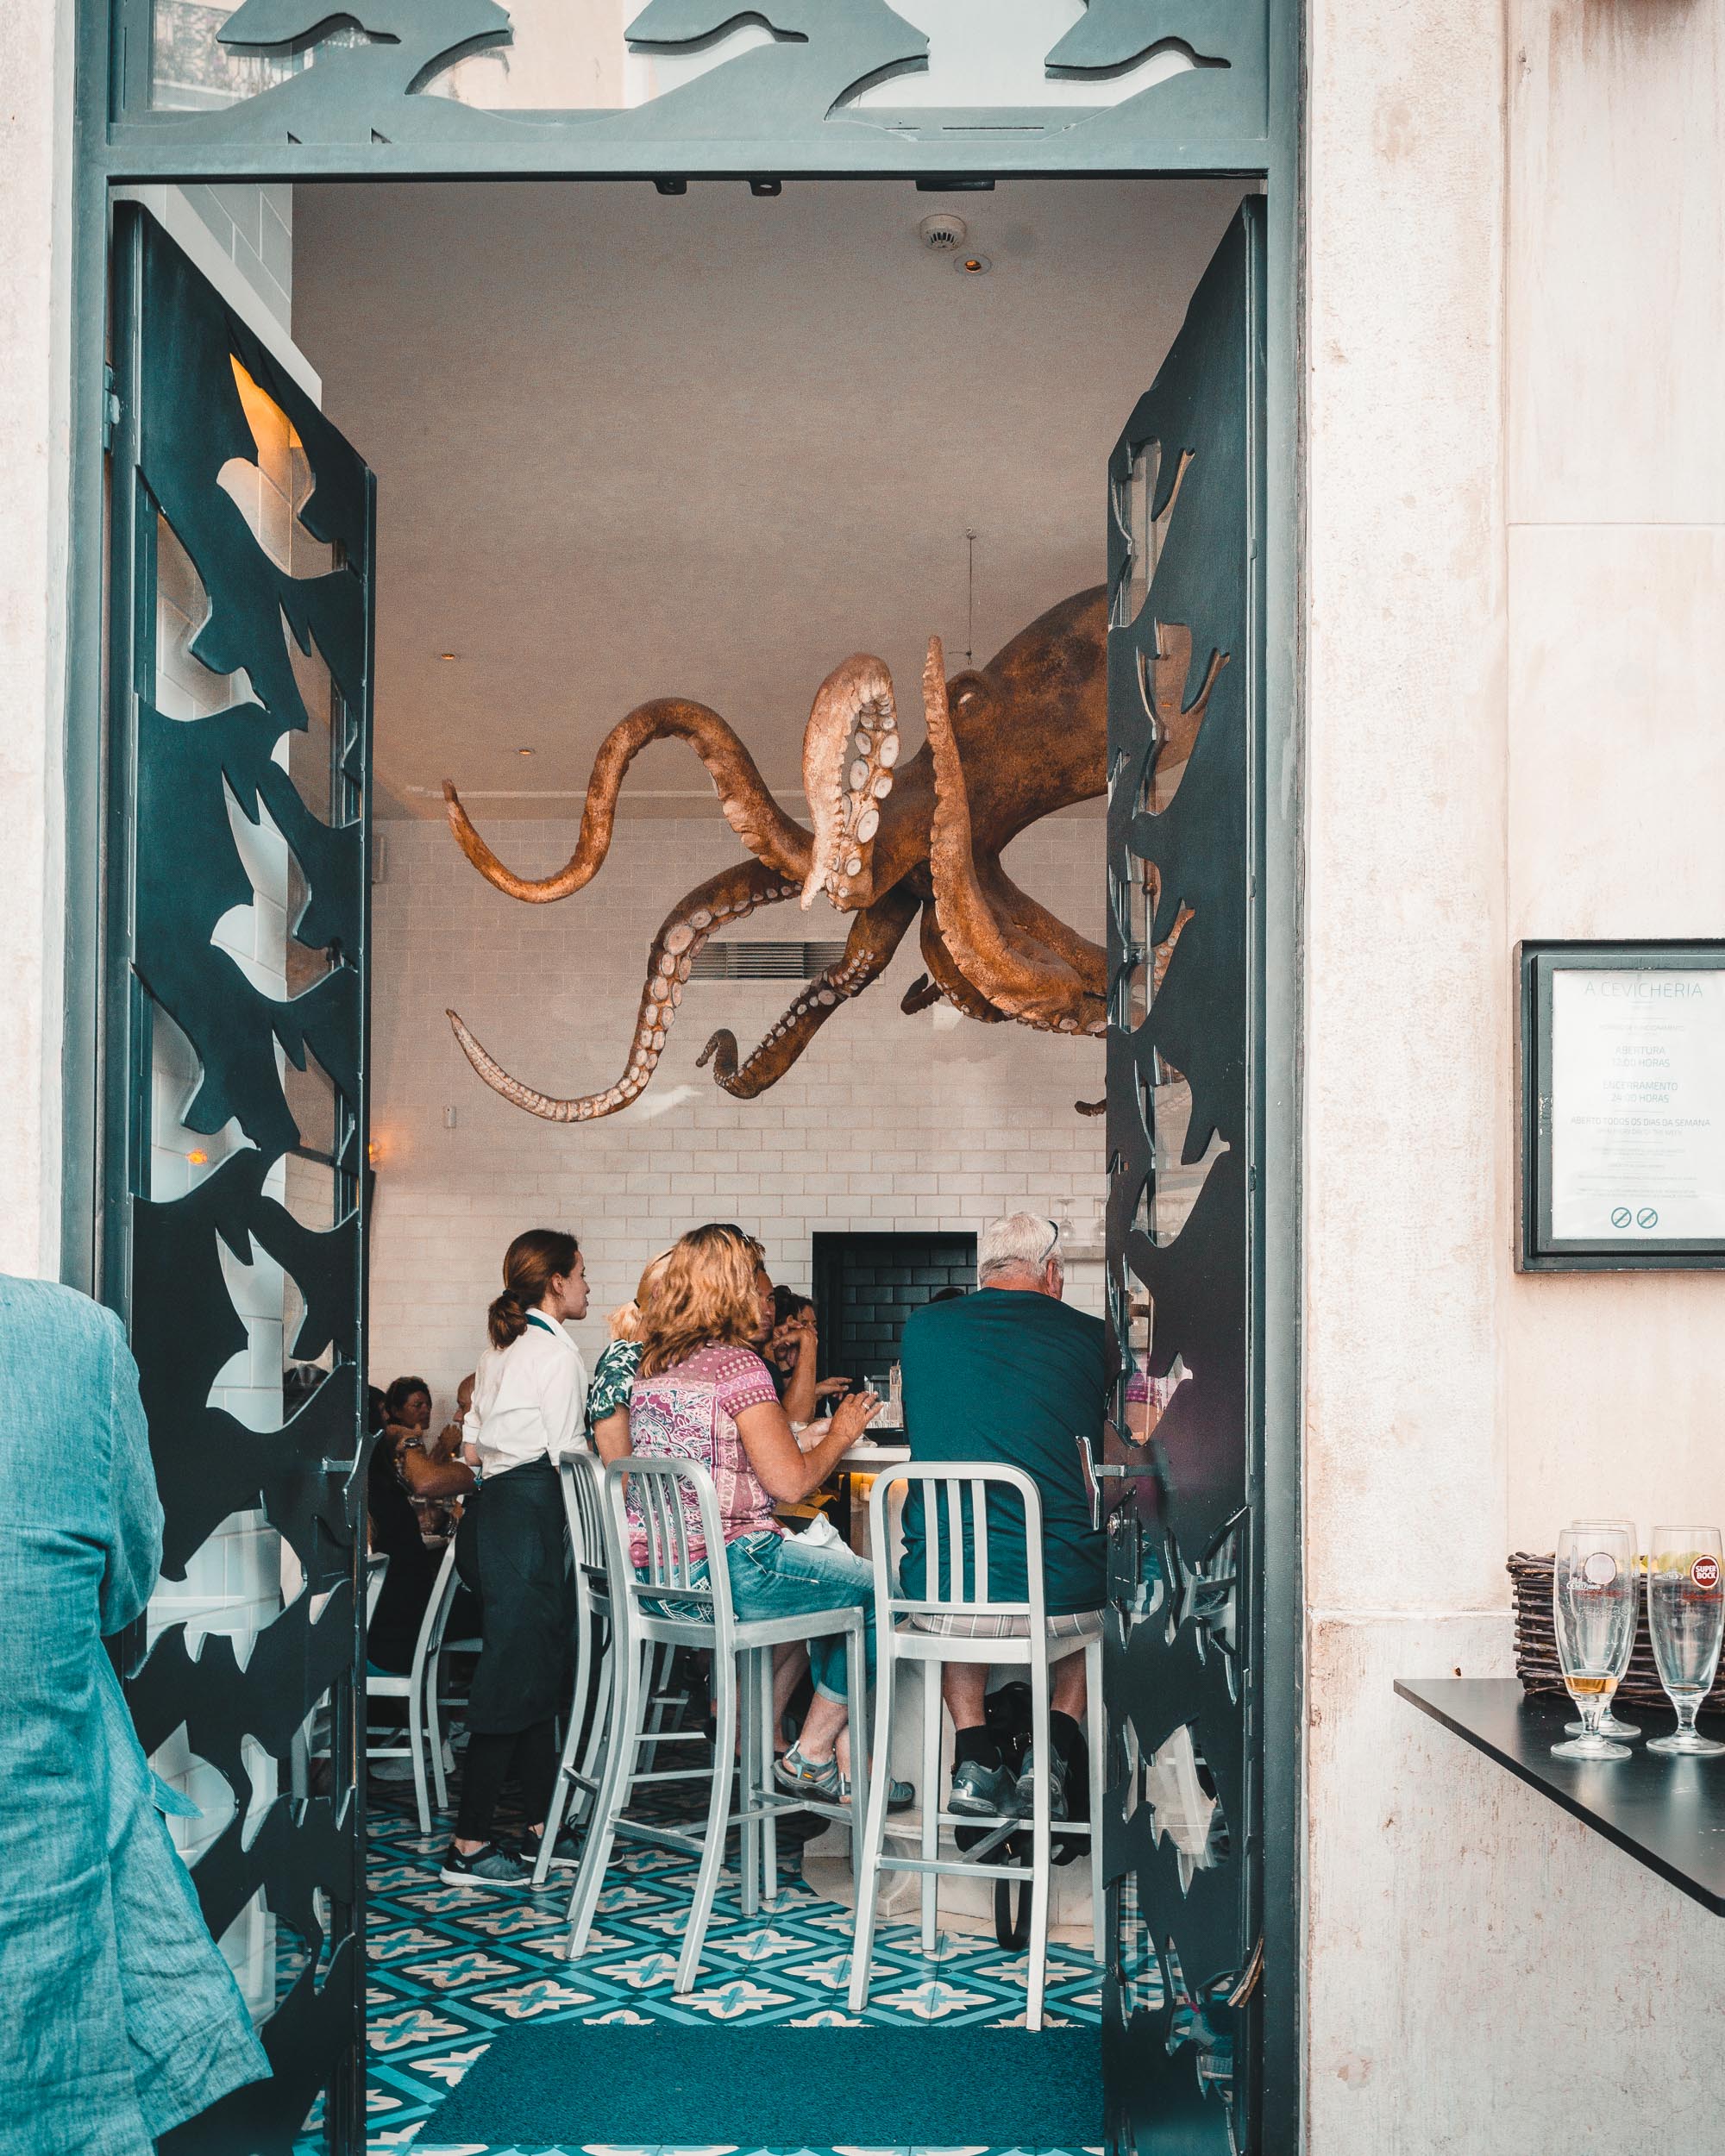 Inside A Cevicheria restaurant in Lisbon, Portugal | Lisbon Travel Guide via Find Us Lost